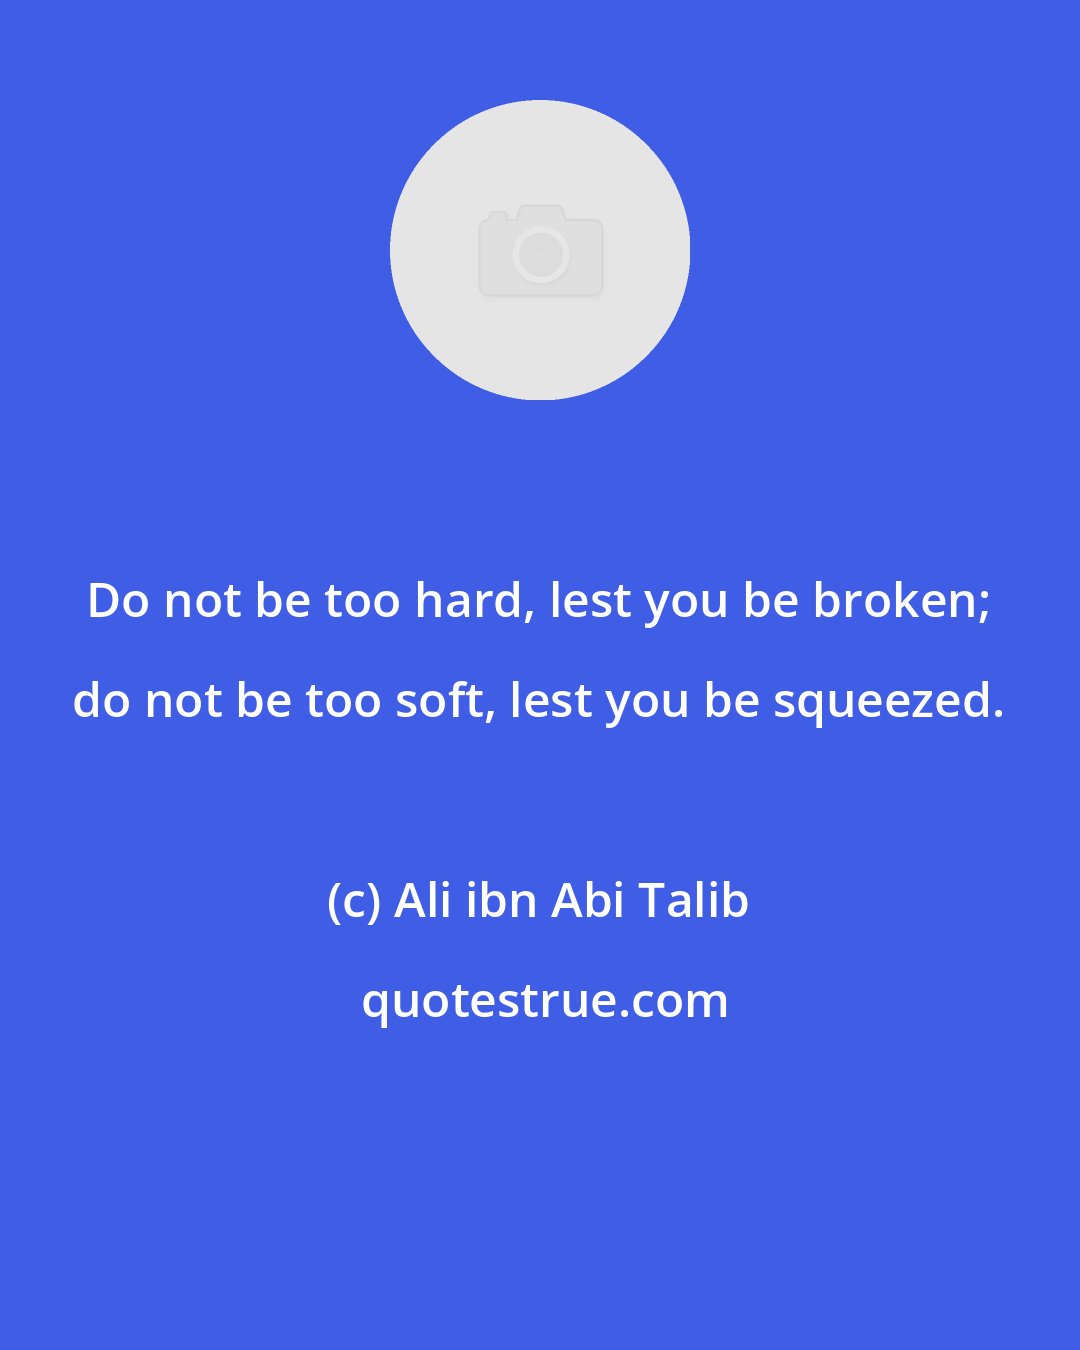 Ali ibn Abi Talib: Do not be too hard, lest you be broken; do not be too soft, lest you be squeezed.